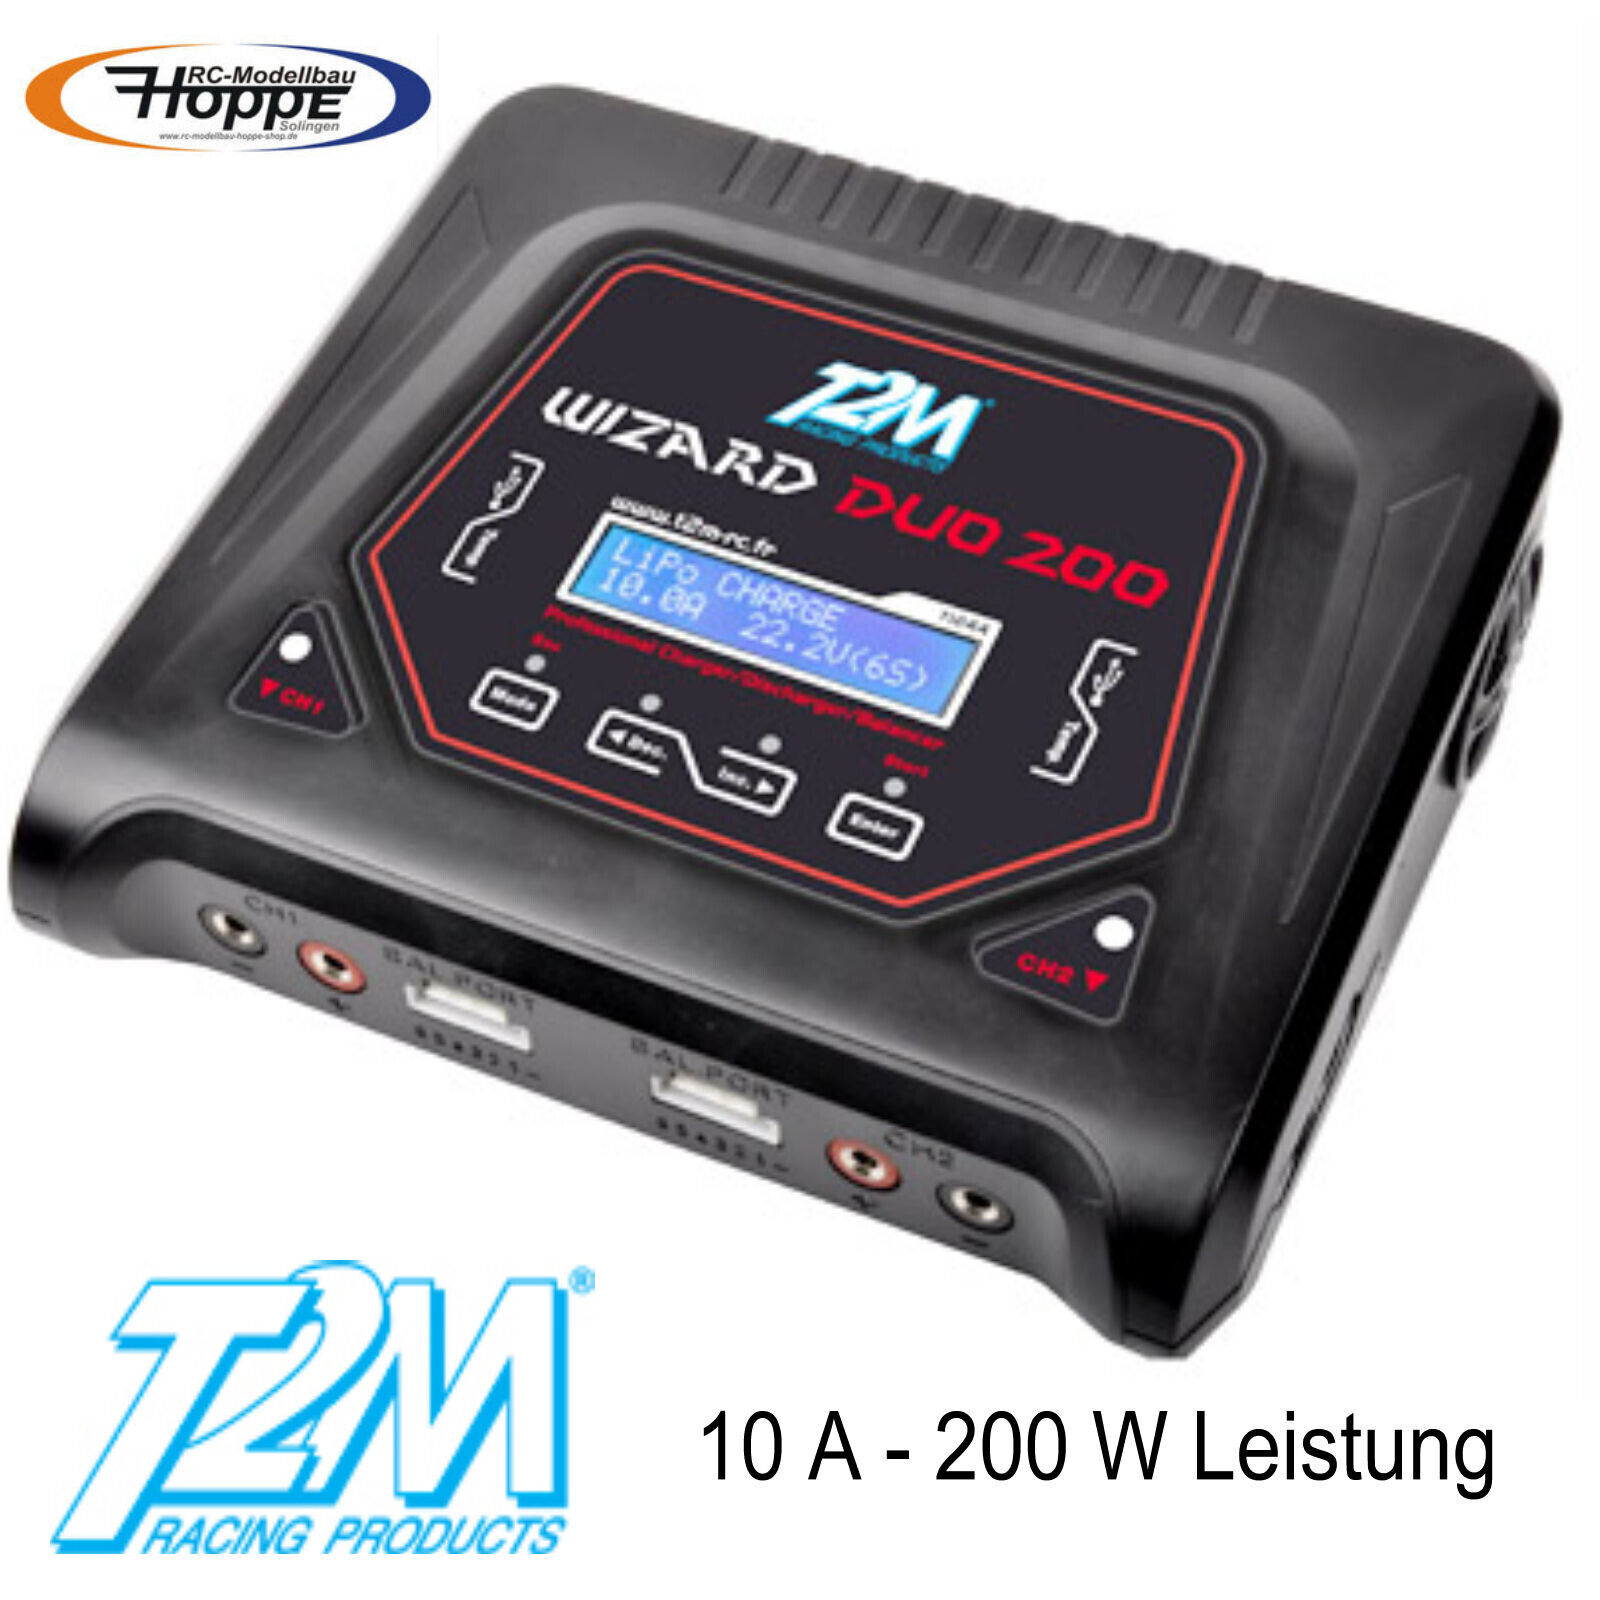 T2M Wizard Duo 200 Hi-End 2 IN 1 Caricatore Bilanciato T1244 10A - 200 Watt